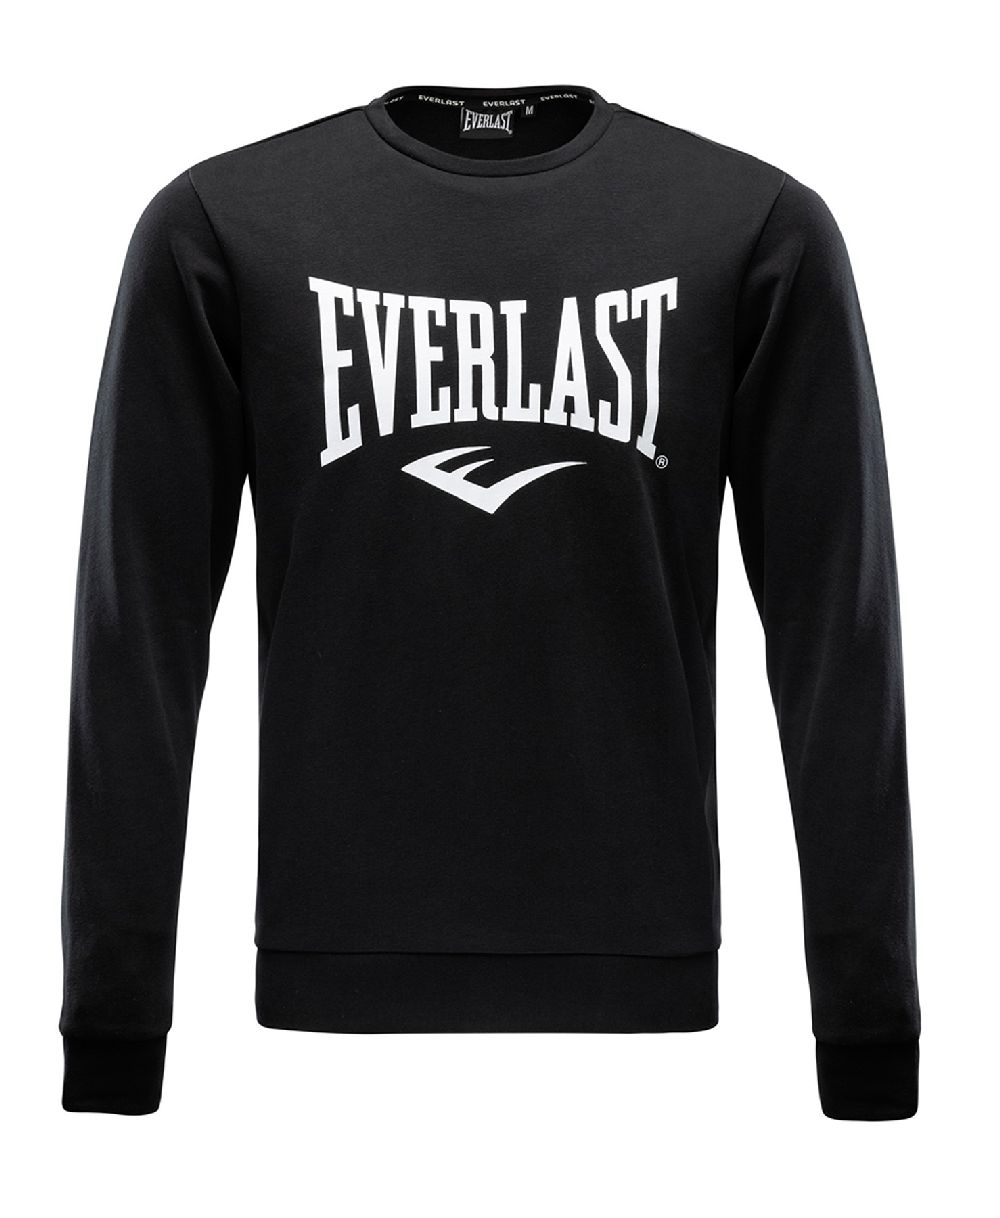 Пуловер Everlast, черный